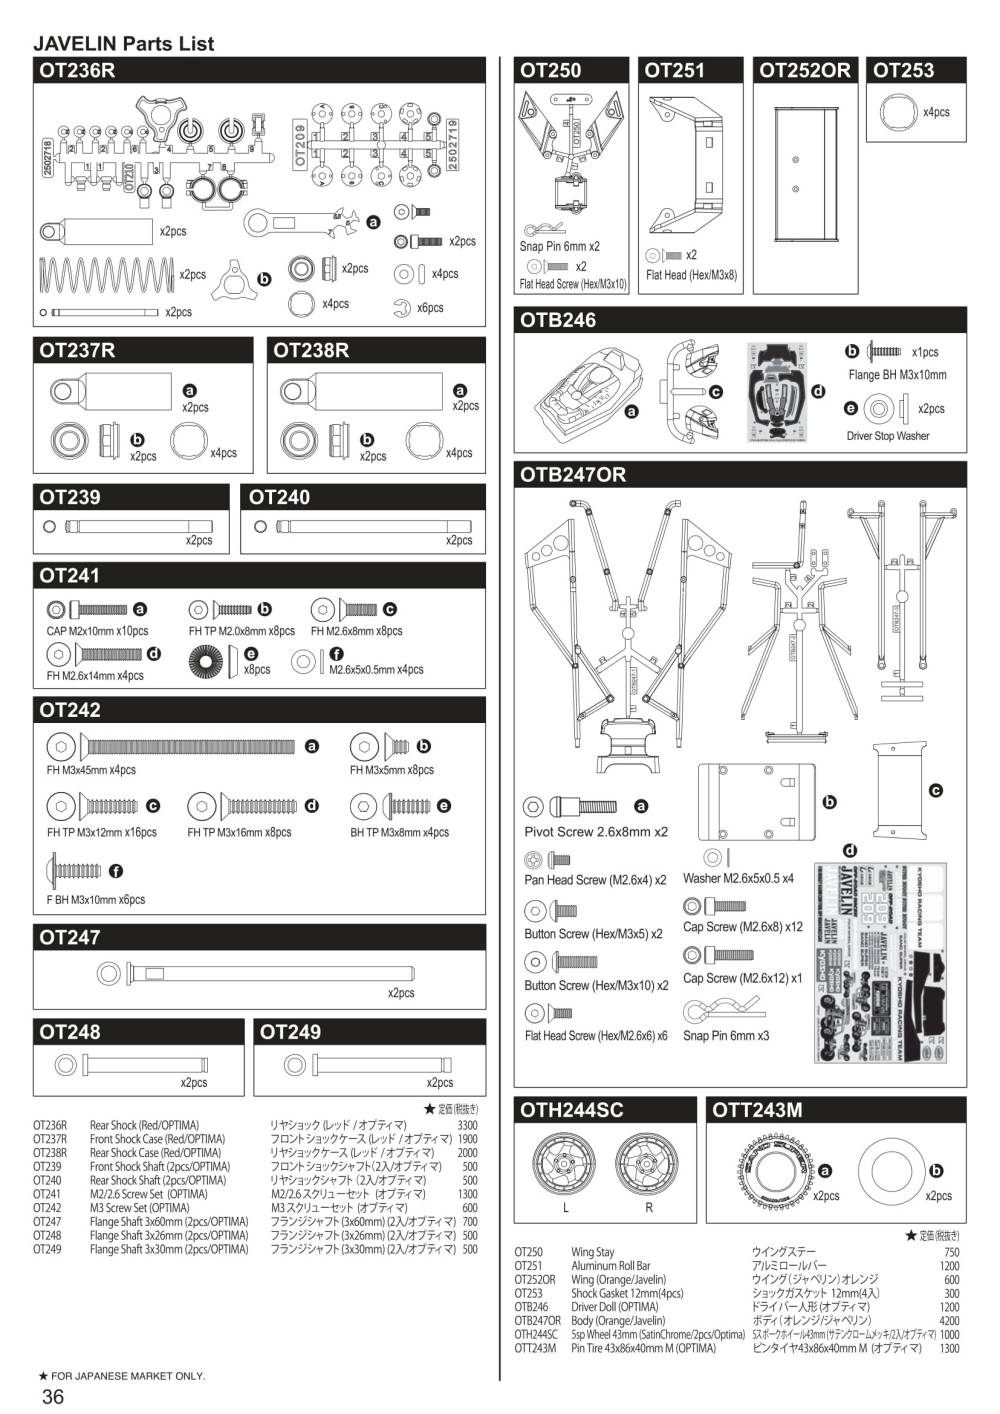 Kyosho - Javelin 2017 - 30618 - RC Model Parts